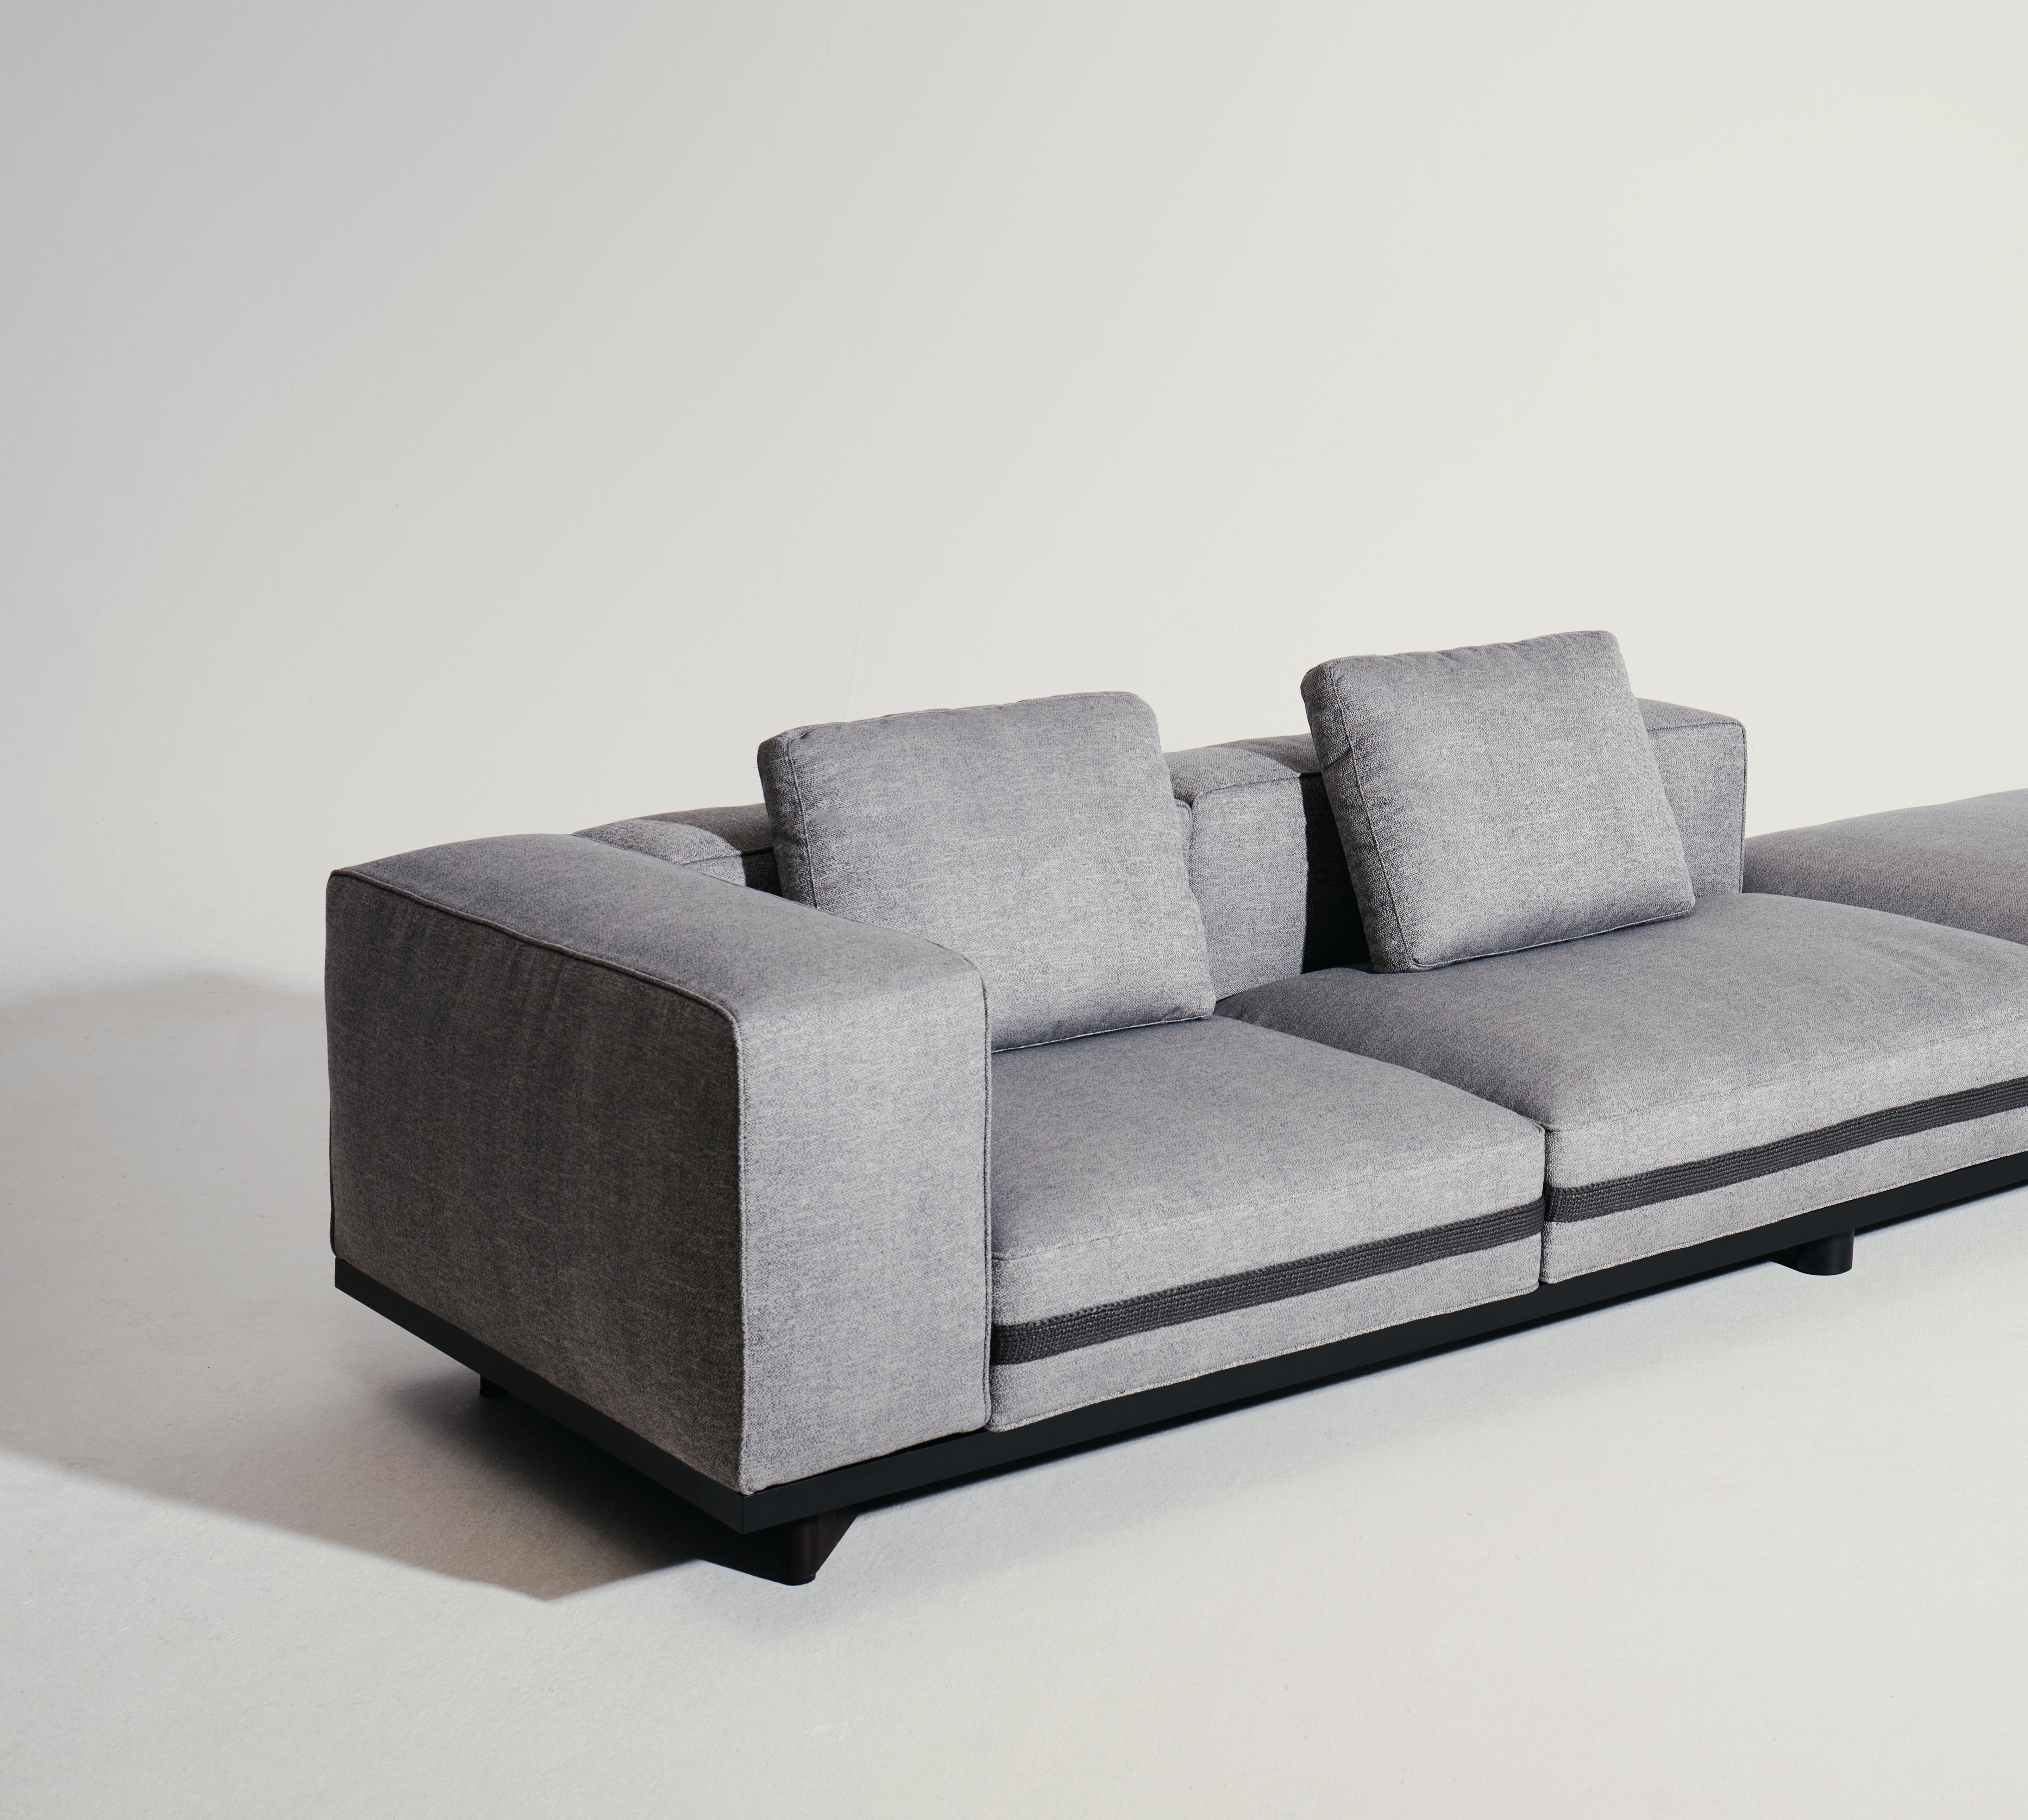 Modern Saint-Rémy Sofa by Luca Nichetto